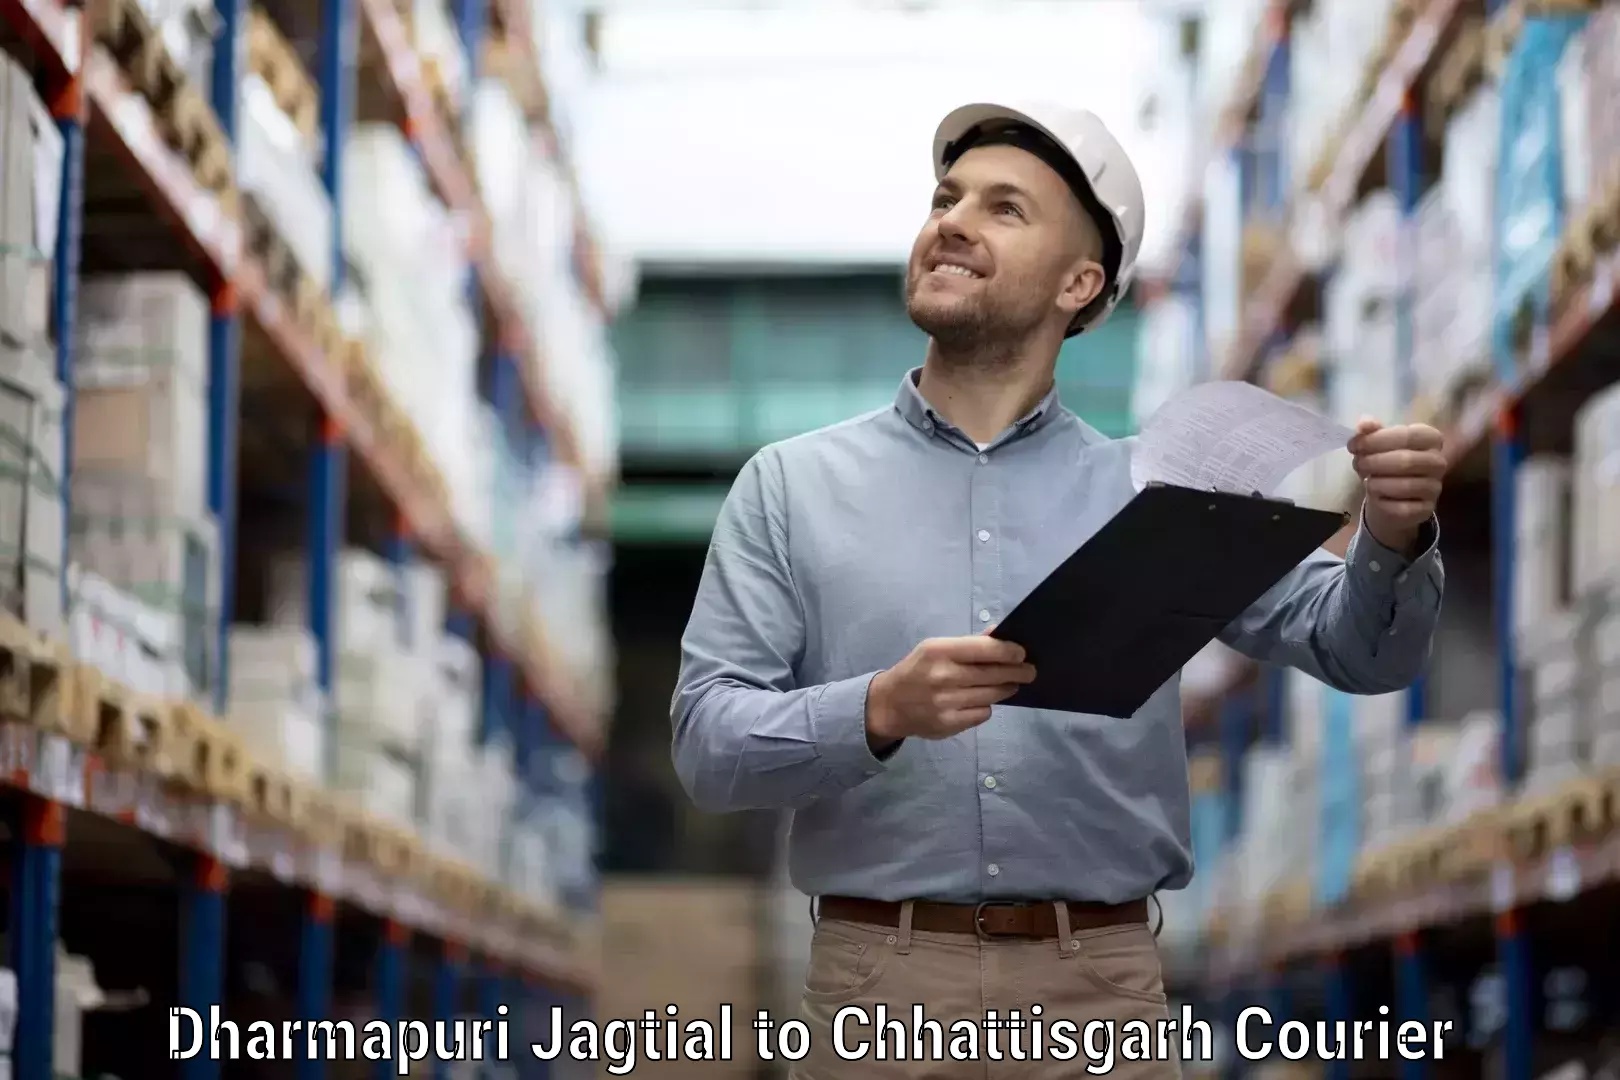 Courier service partnerships Dharmapuri Jagtial to Dhamtari